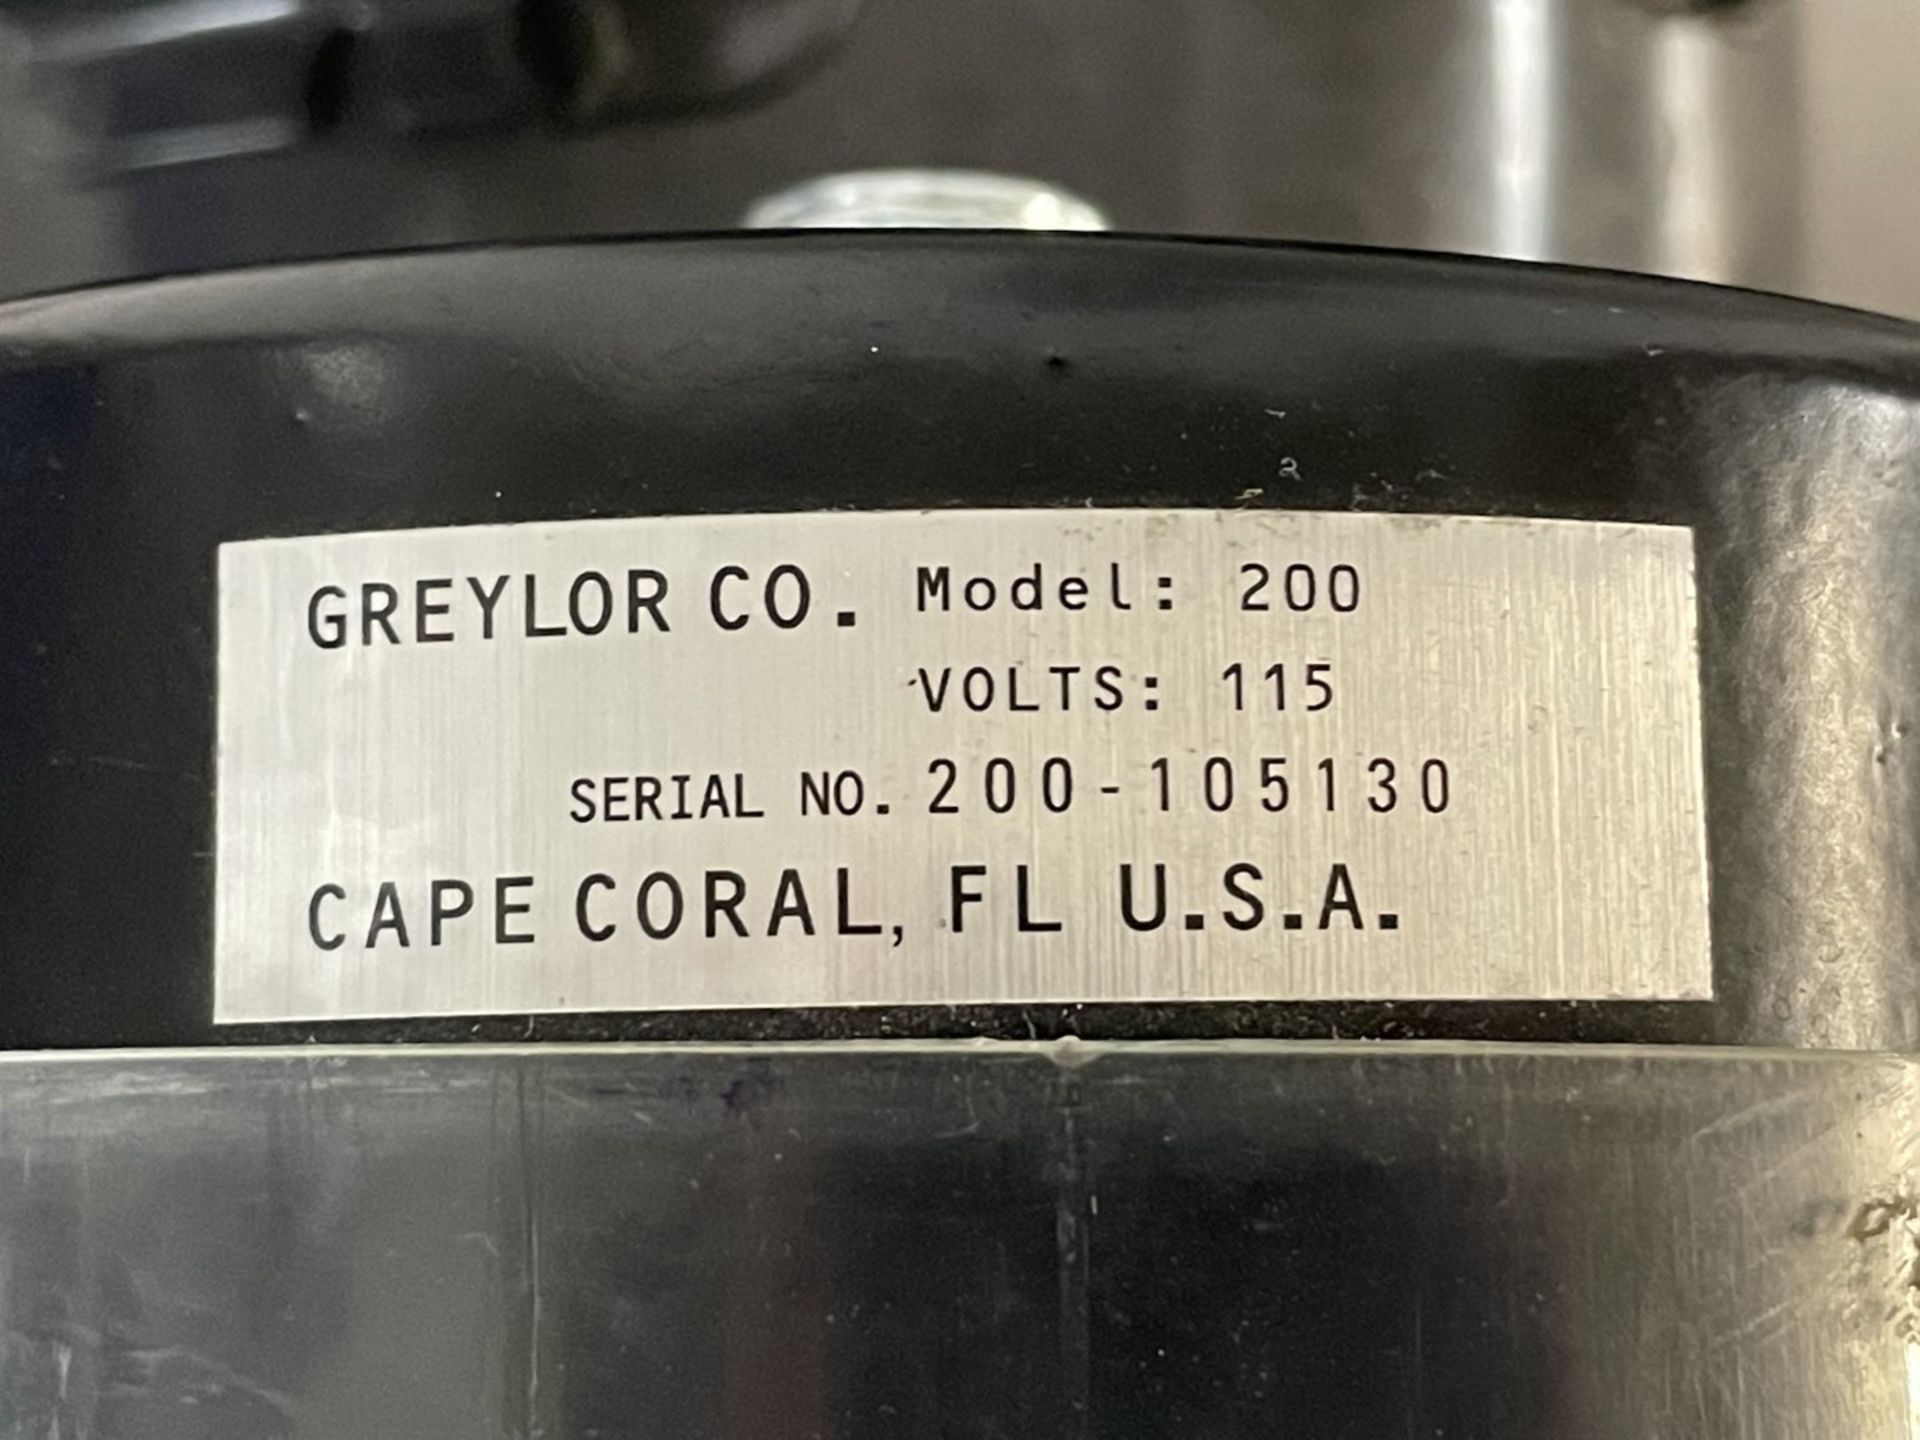 Greylor Co. .25 hp Peristaltic Pump, Model 200 - Image 2 of 6